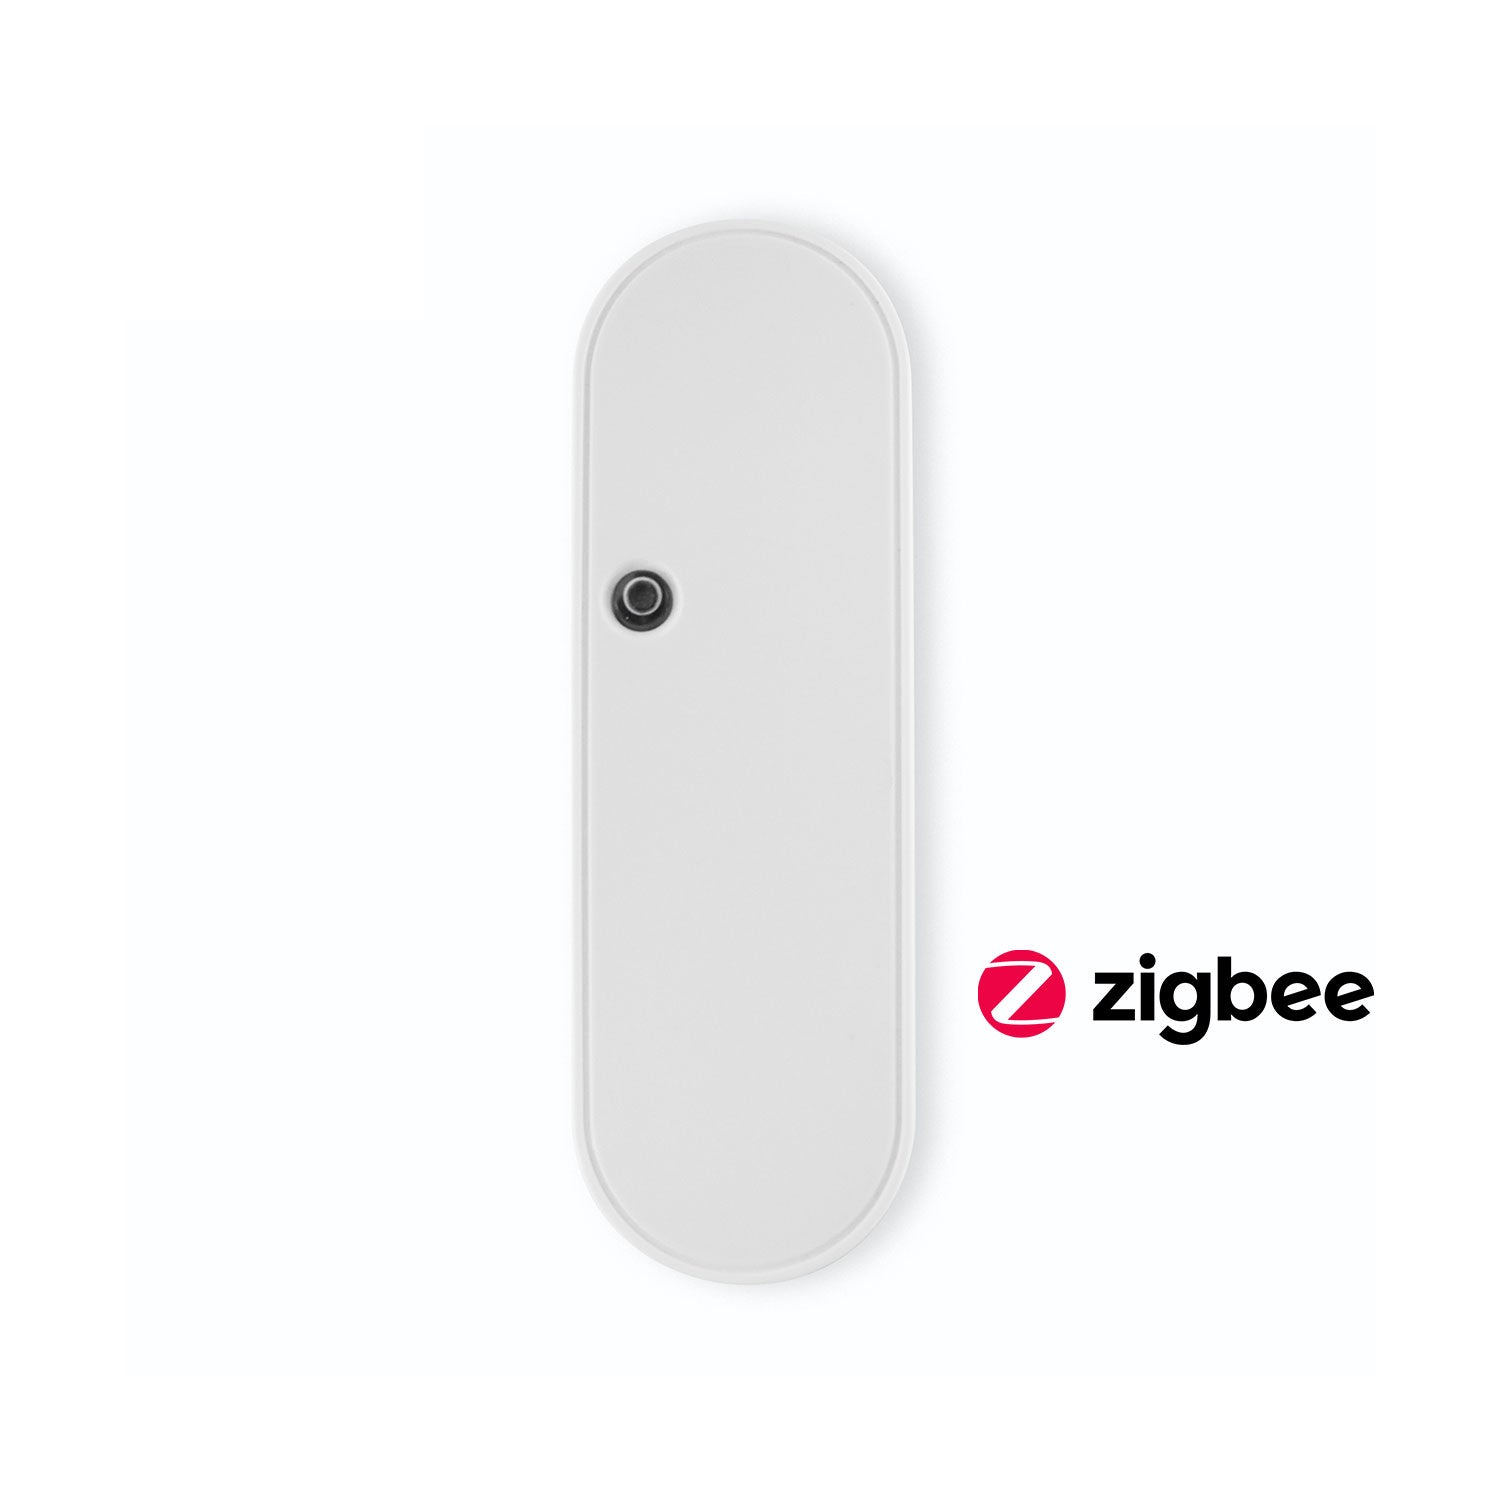 frient Smart Cable (Zigbee) Logos